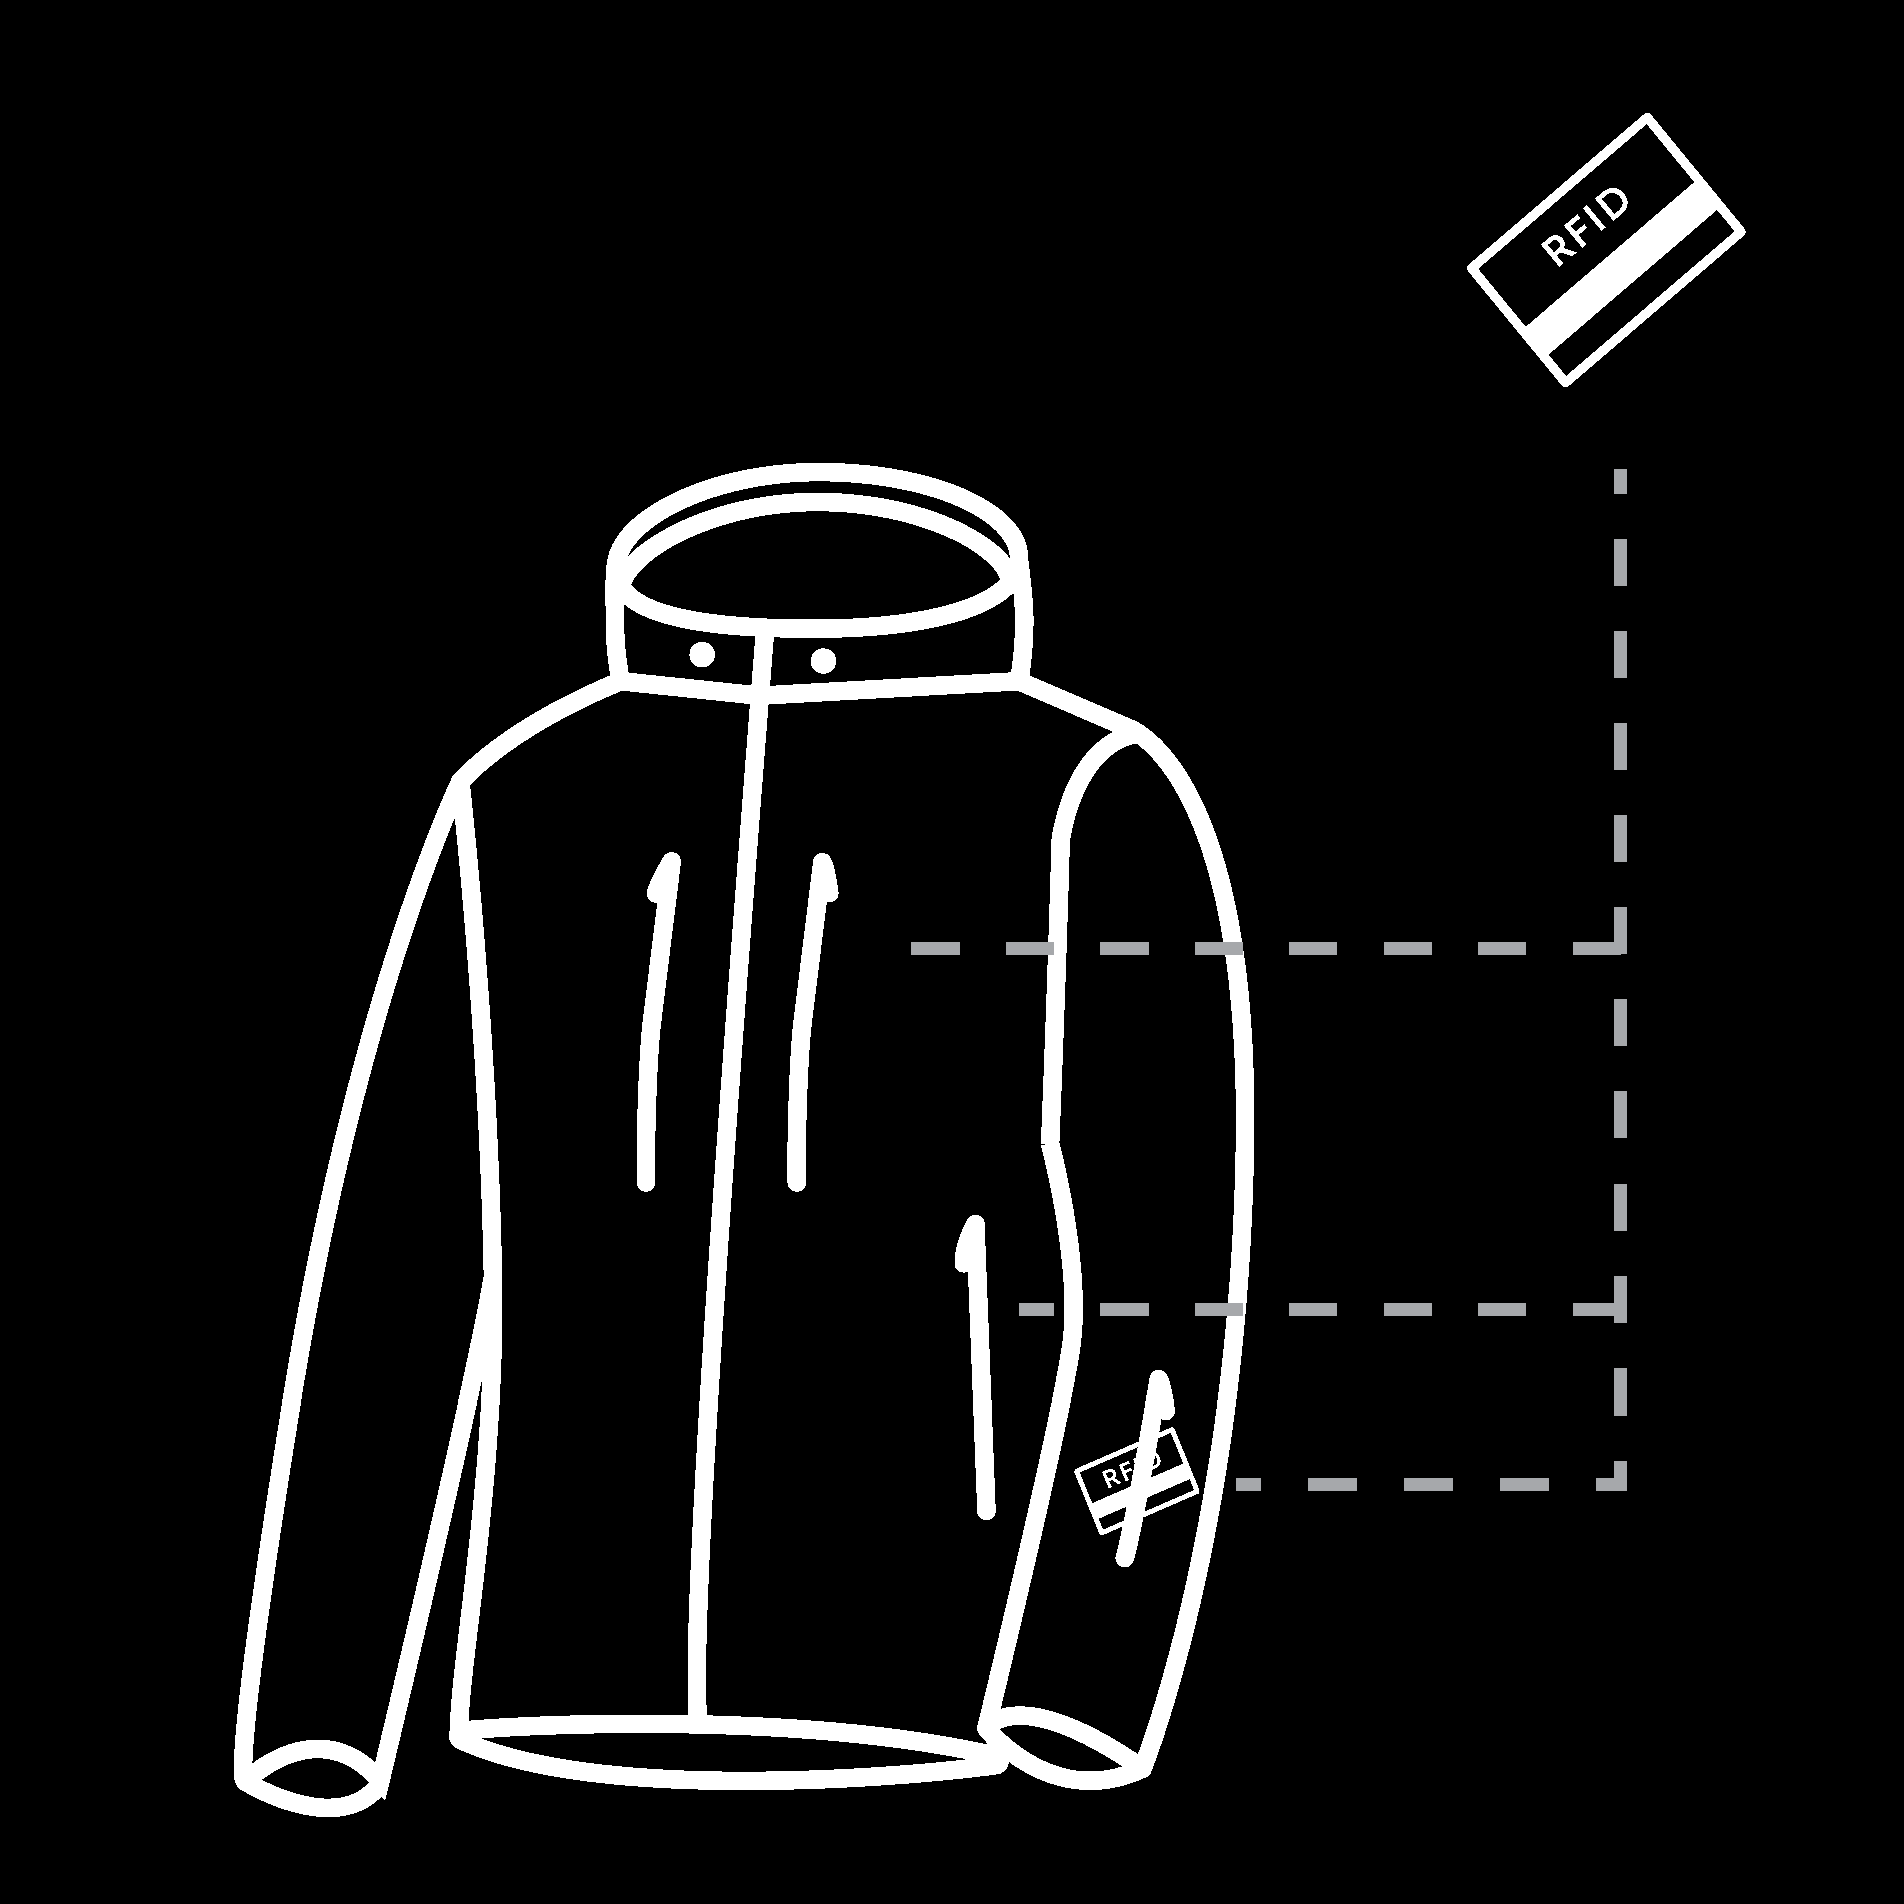 Jacket with pockets illustration